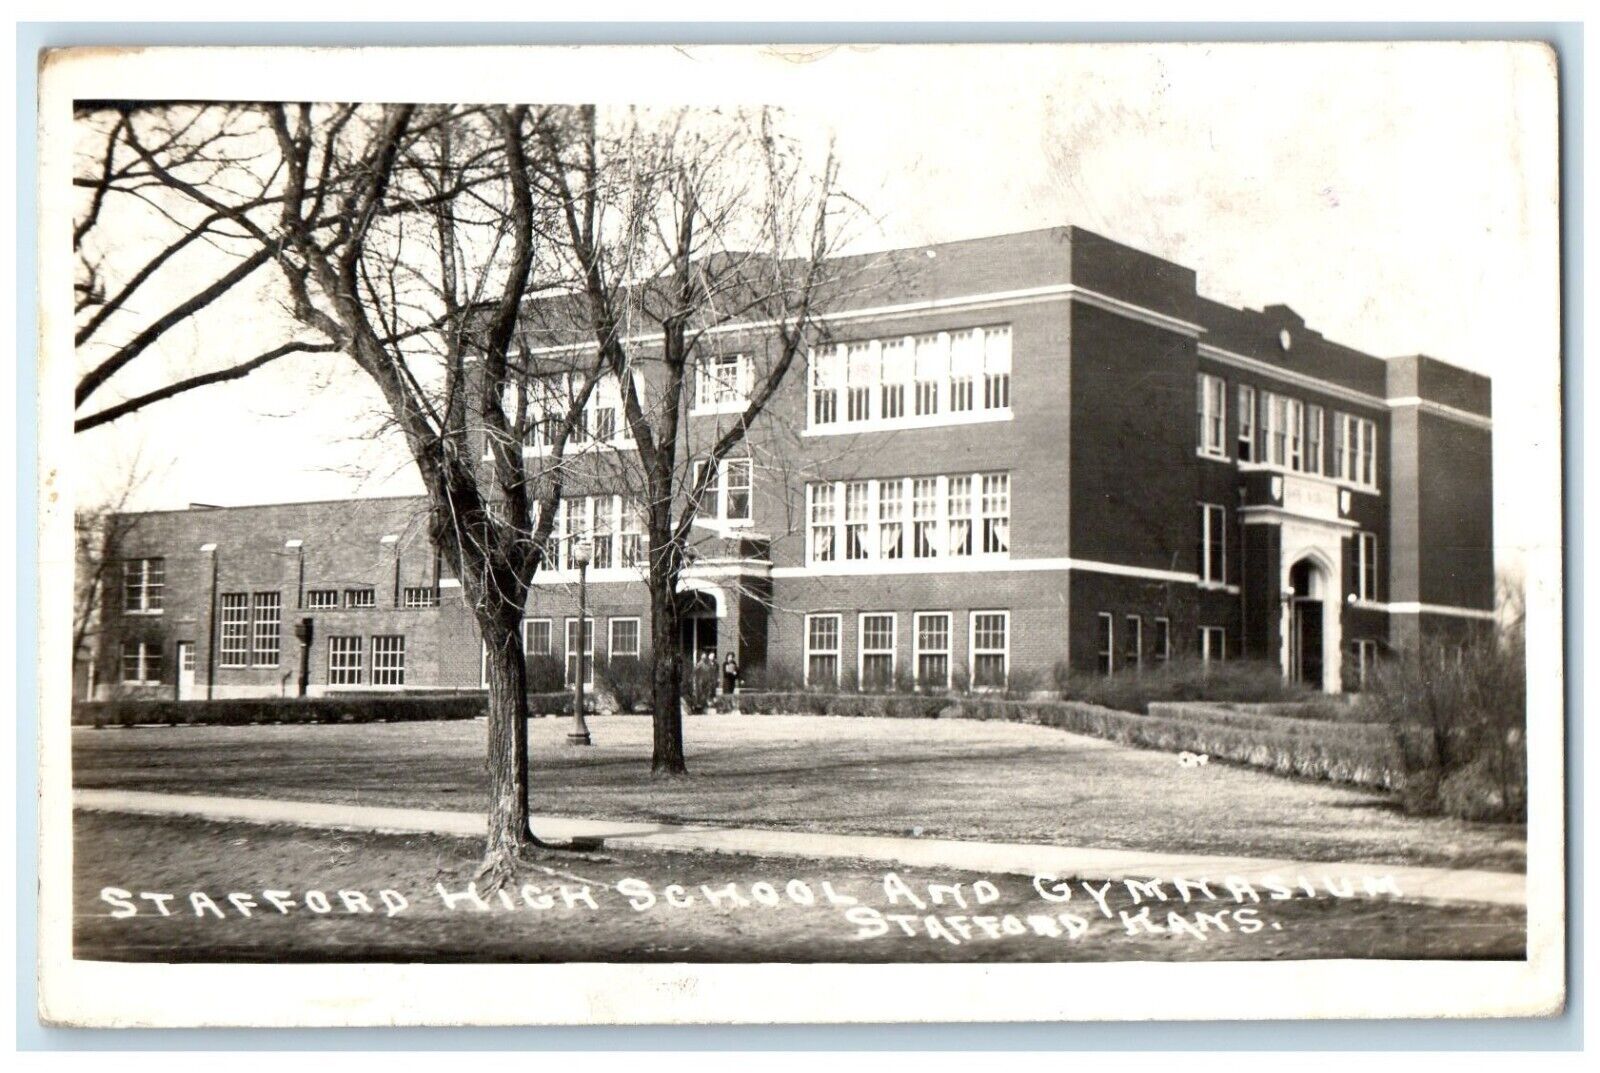 1941 Stafford High School And Gymnasium Stafford Kansas KS RPPC Photo Postcard